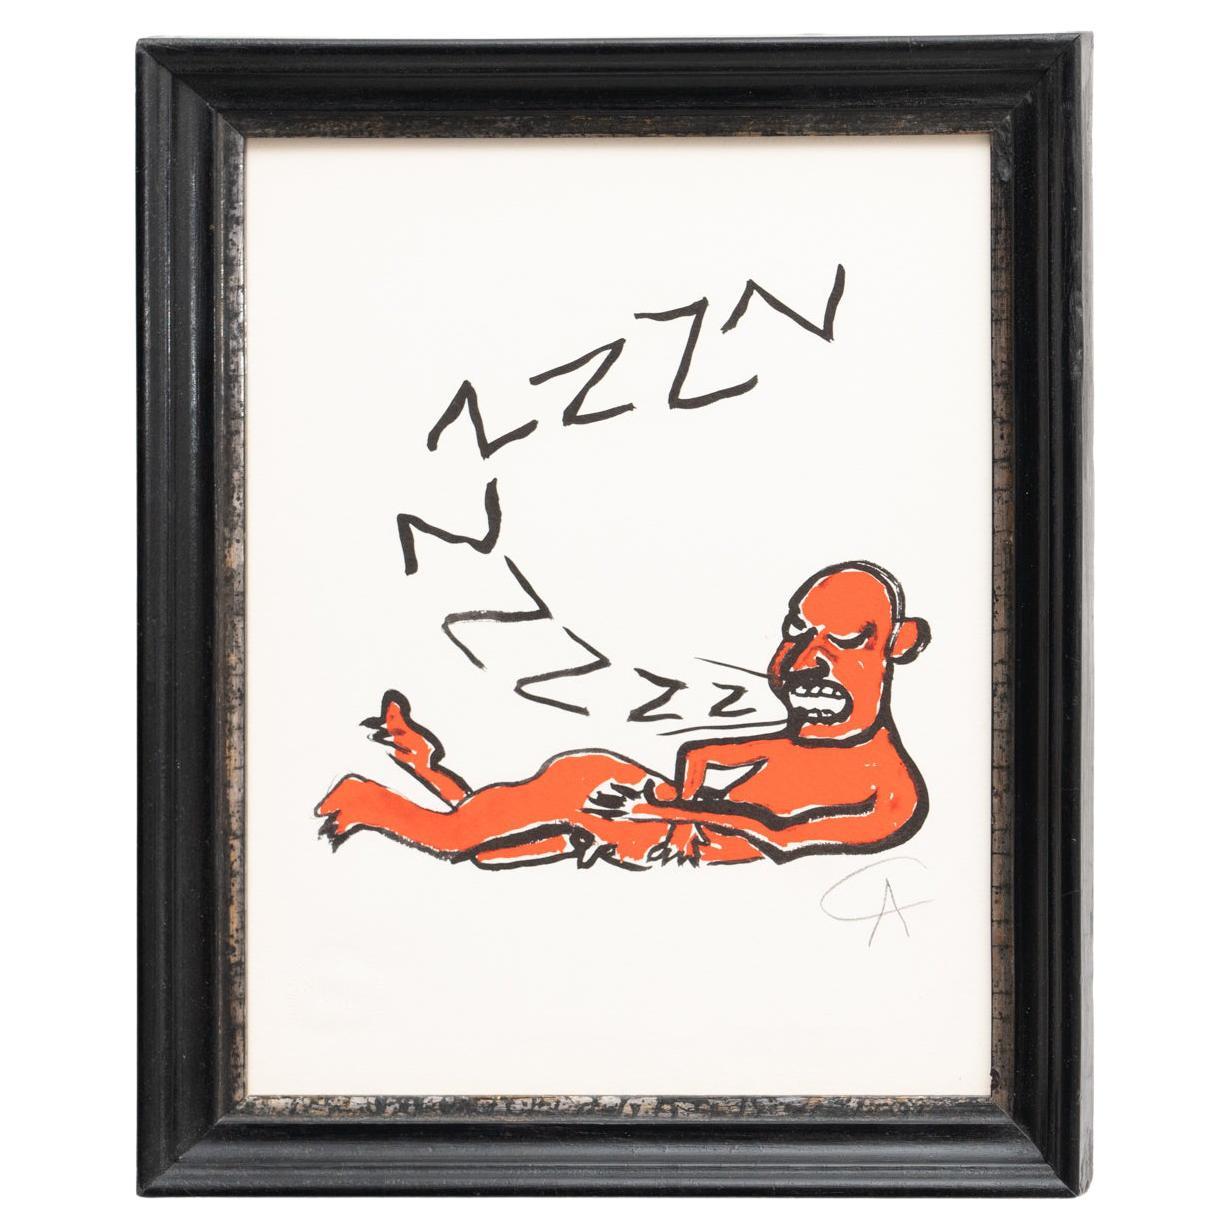 Alexander Calder, 'Z' Lithography, 1973